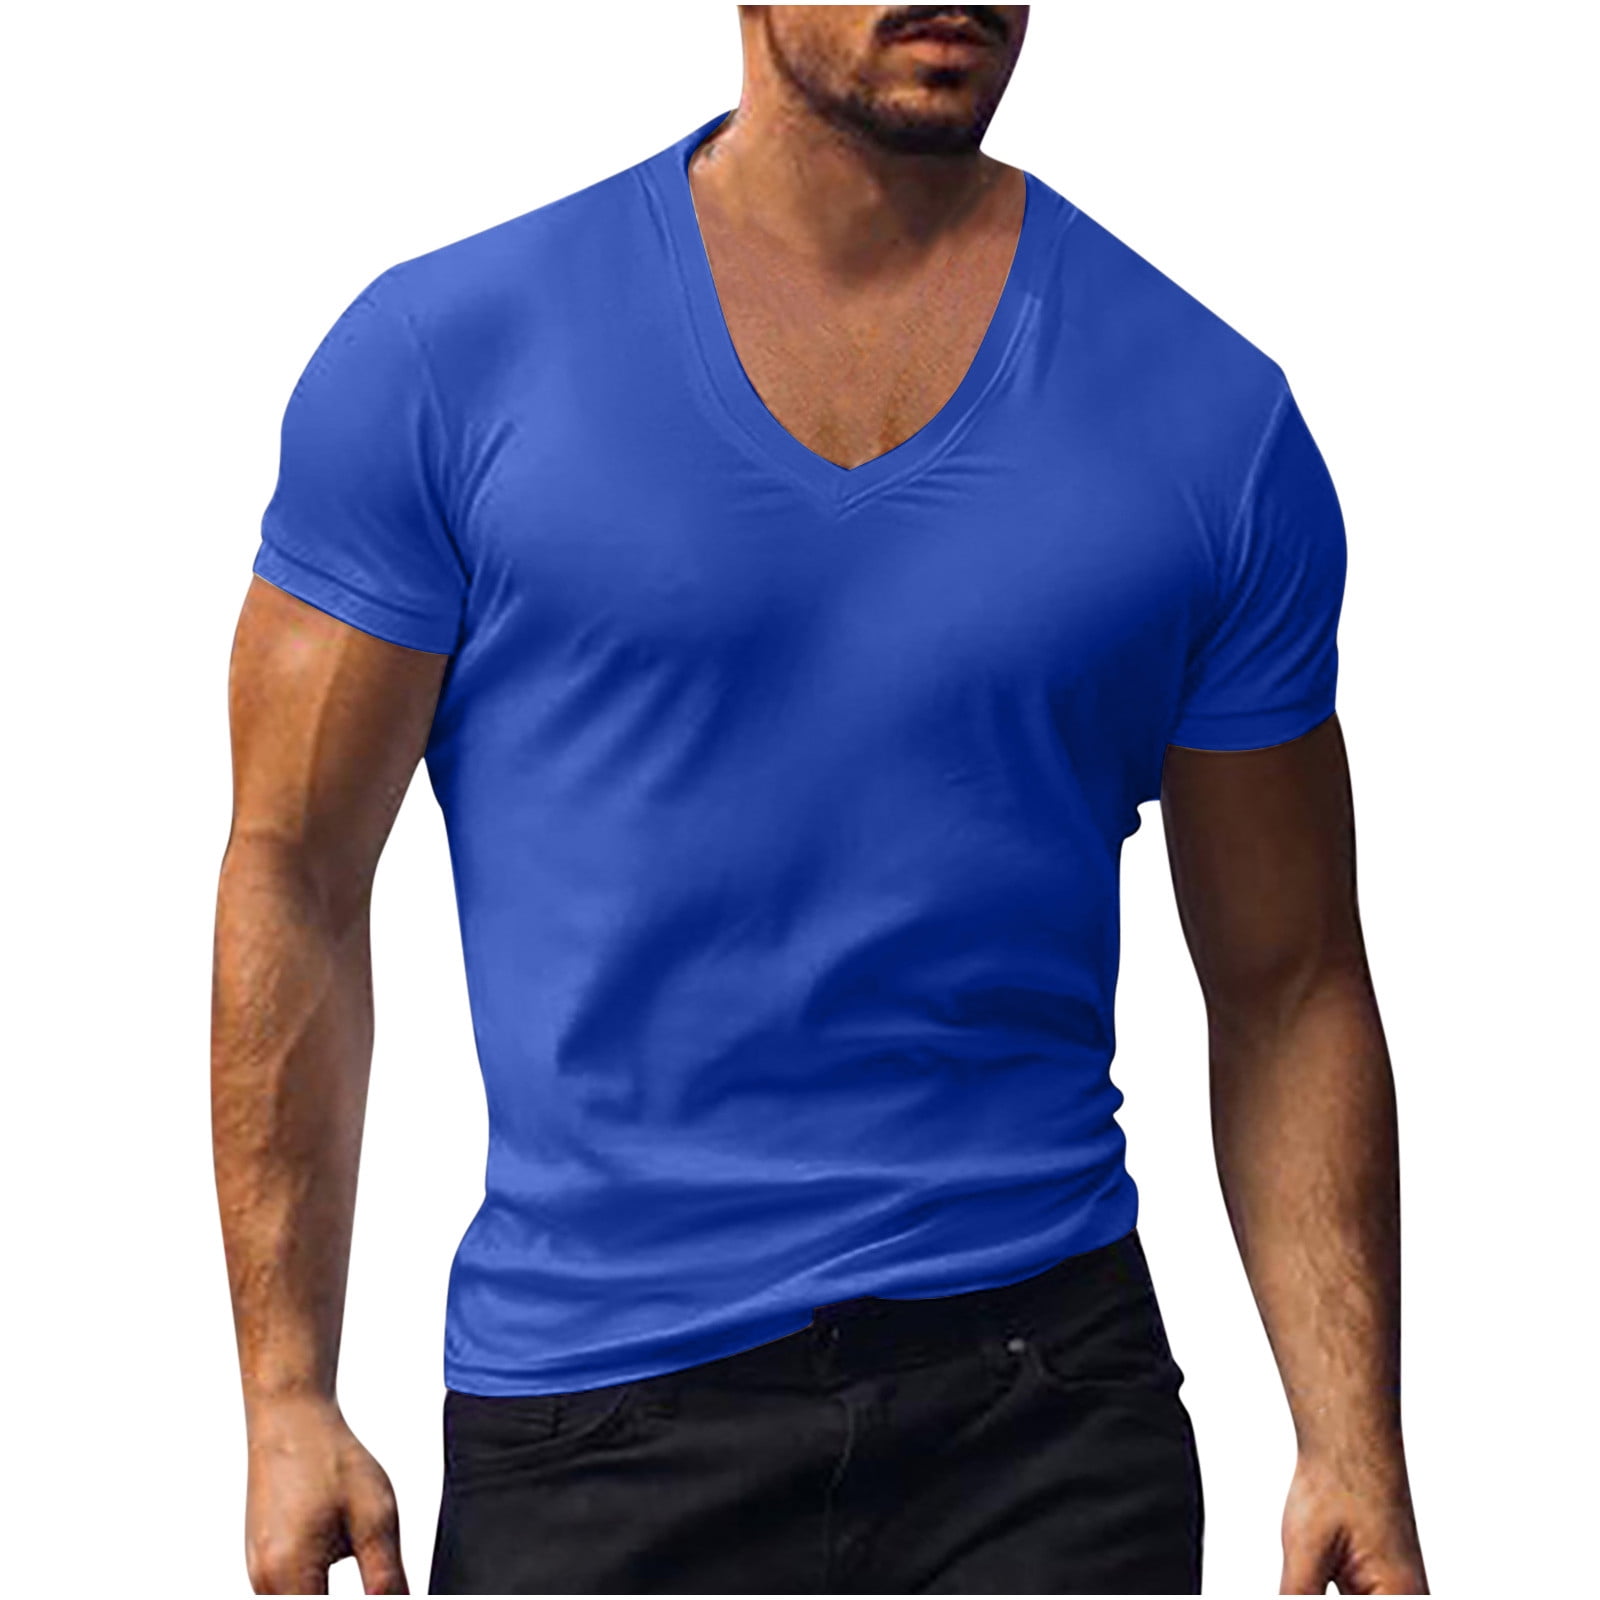 VSSSJ Men's Fashion Casual Tshirts Big and Tall Solid Color V-Neck ...